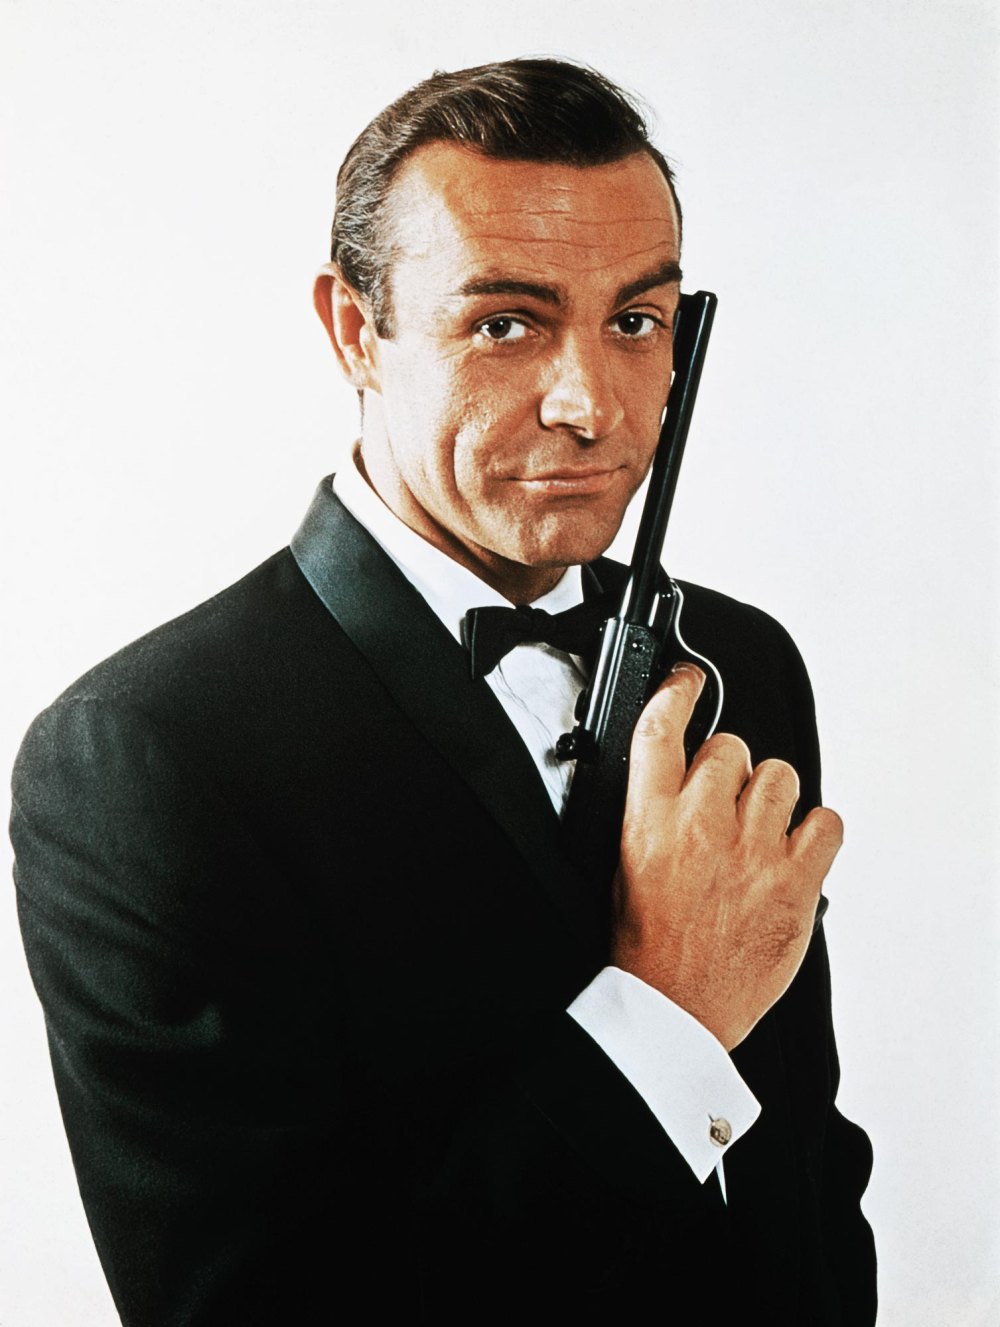 Jacob Elordi Reacts to Rumors He ll be the Next James Bond 429